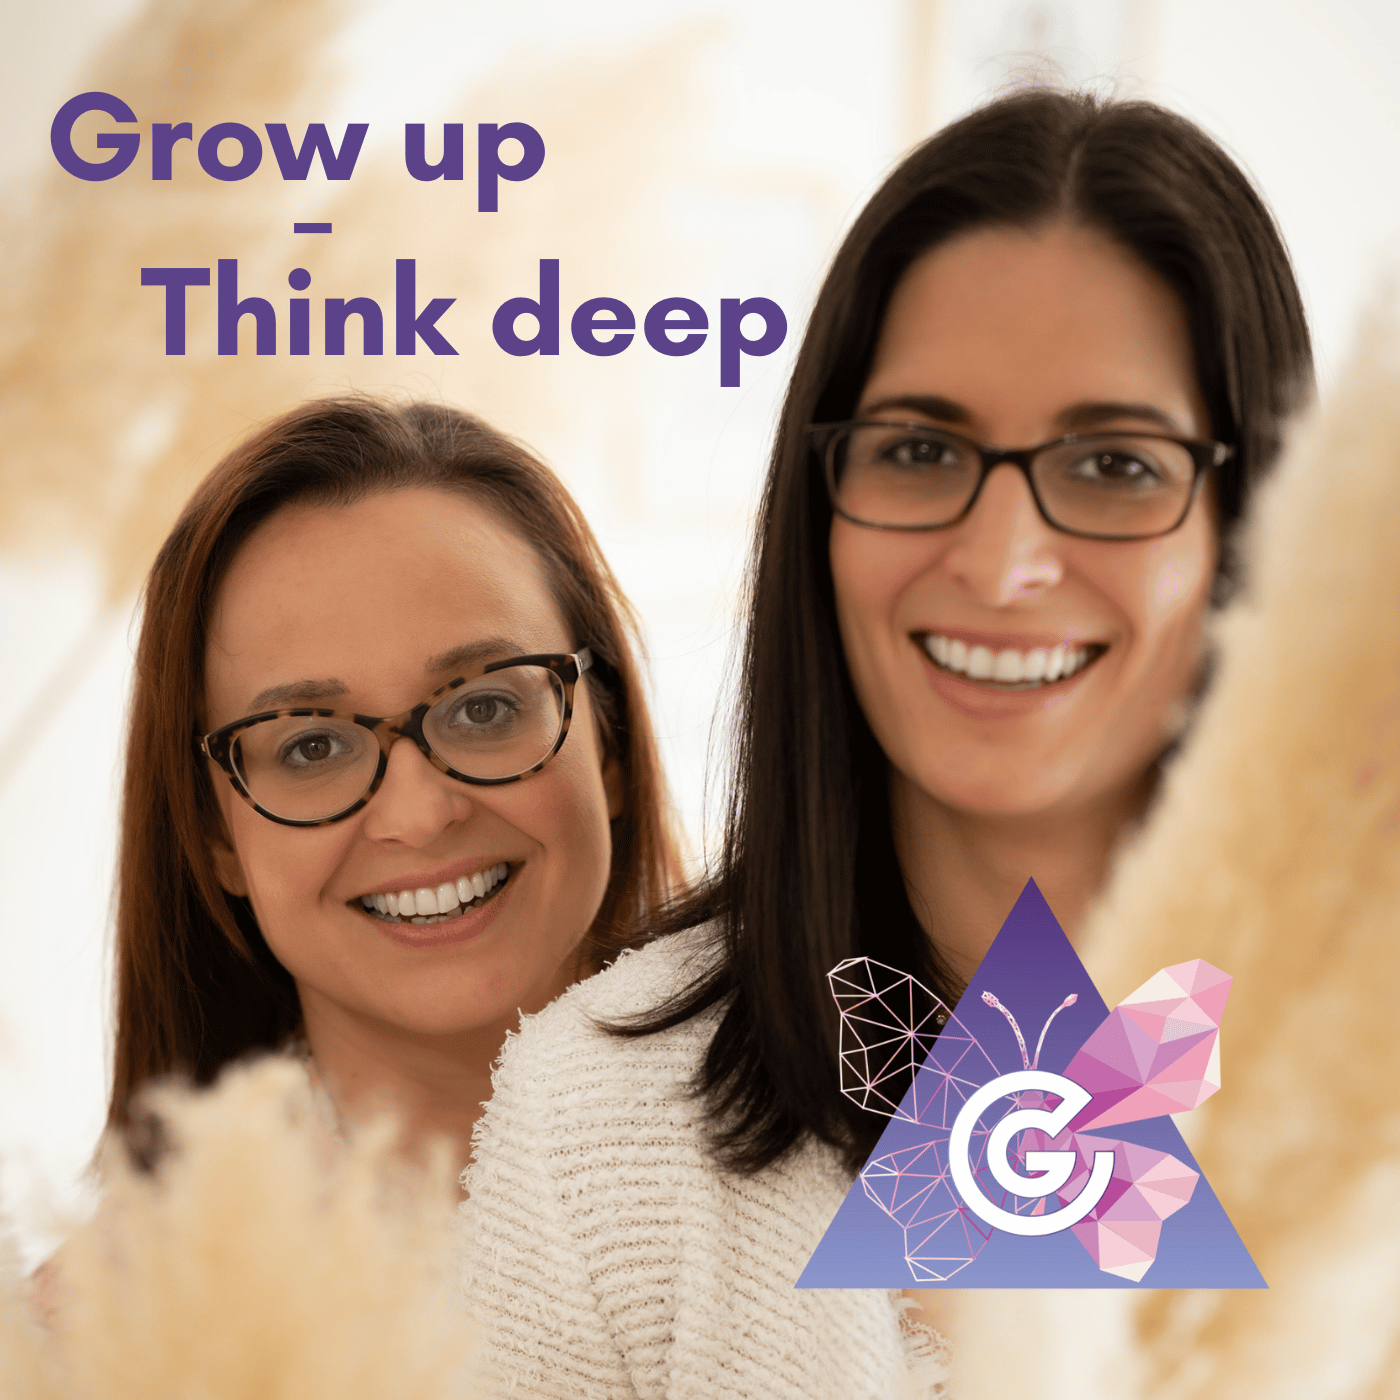 Grow up - think deep